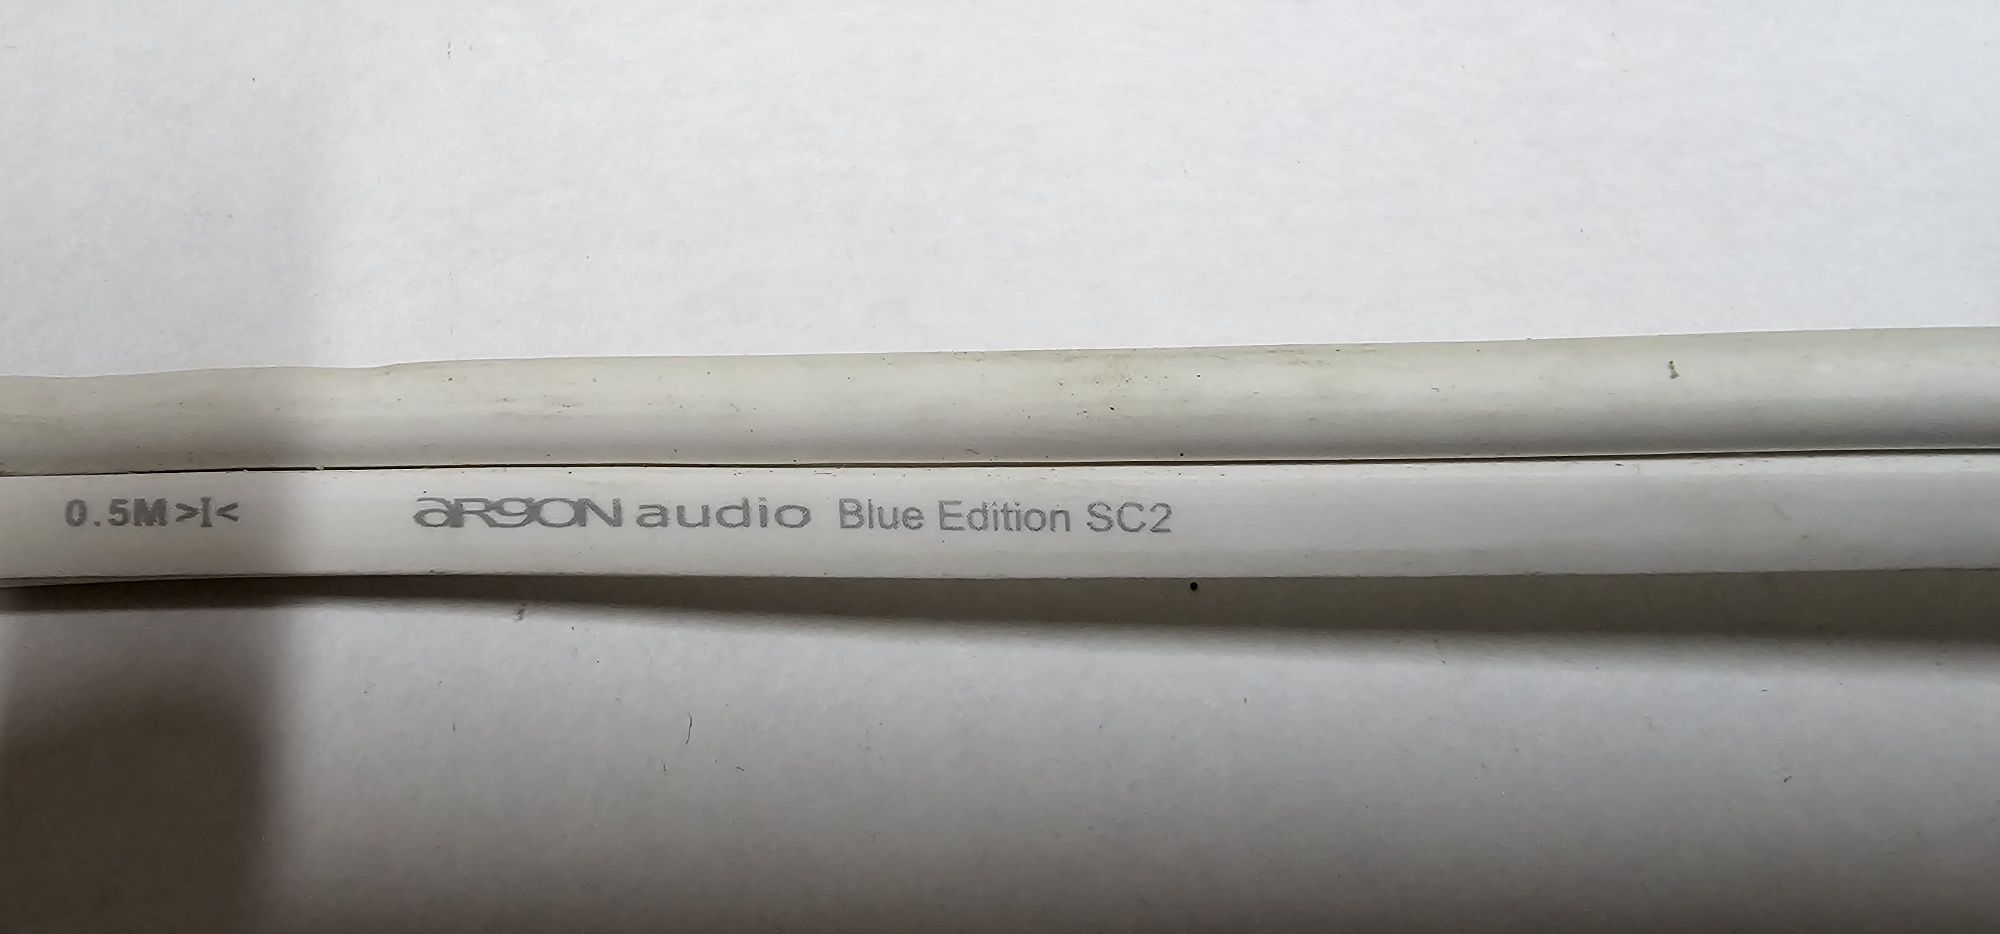 Argon Blue edition SC2